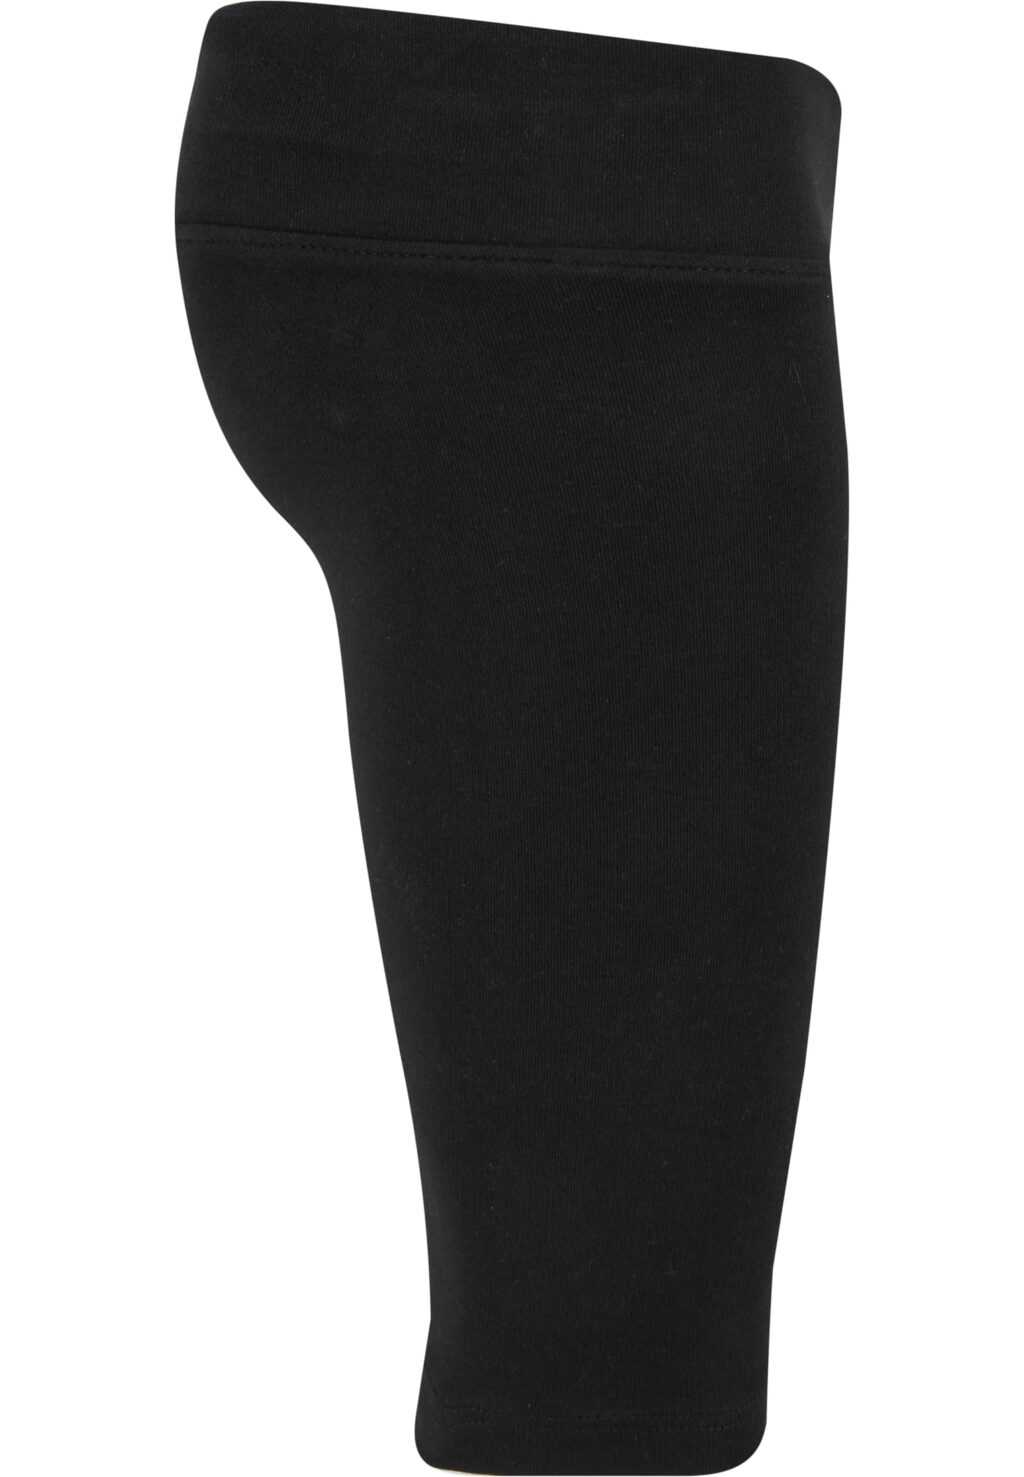 Girls High Waist Cycle Shorts 2-Pack black+black UCK2632A